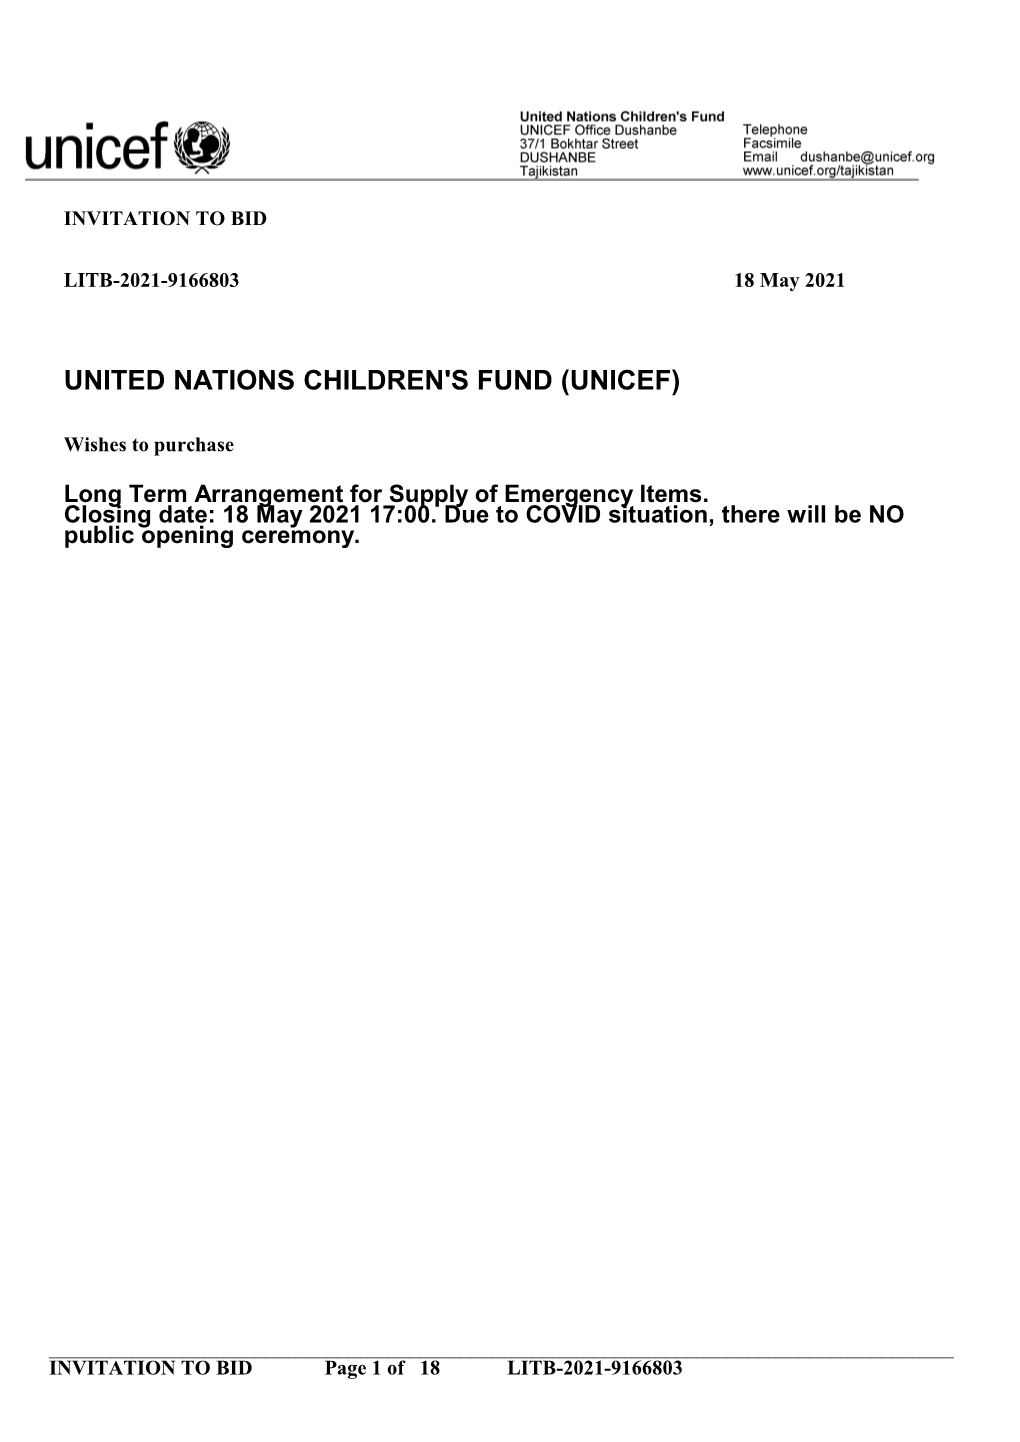 United Nations Children's Fund (Unicef)